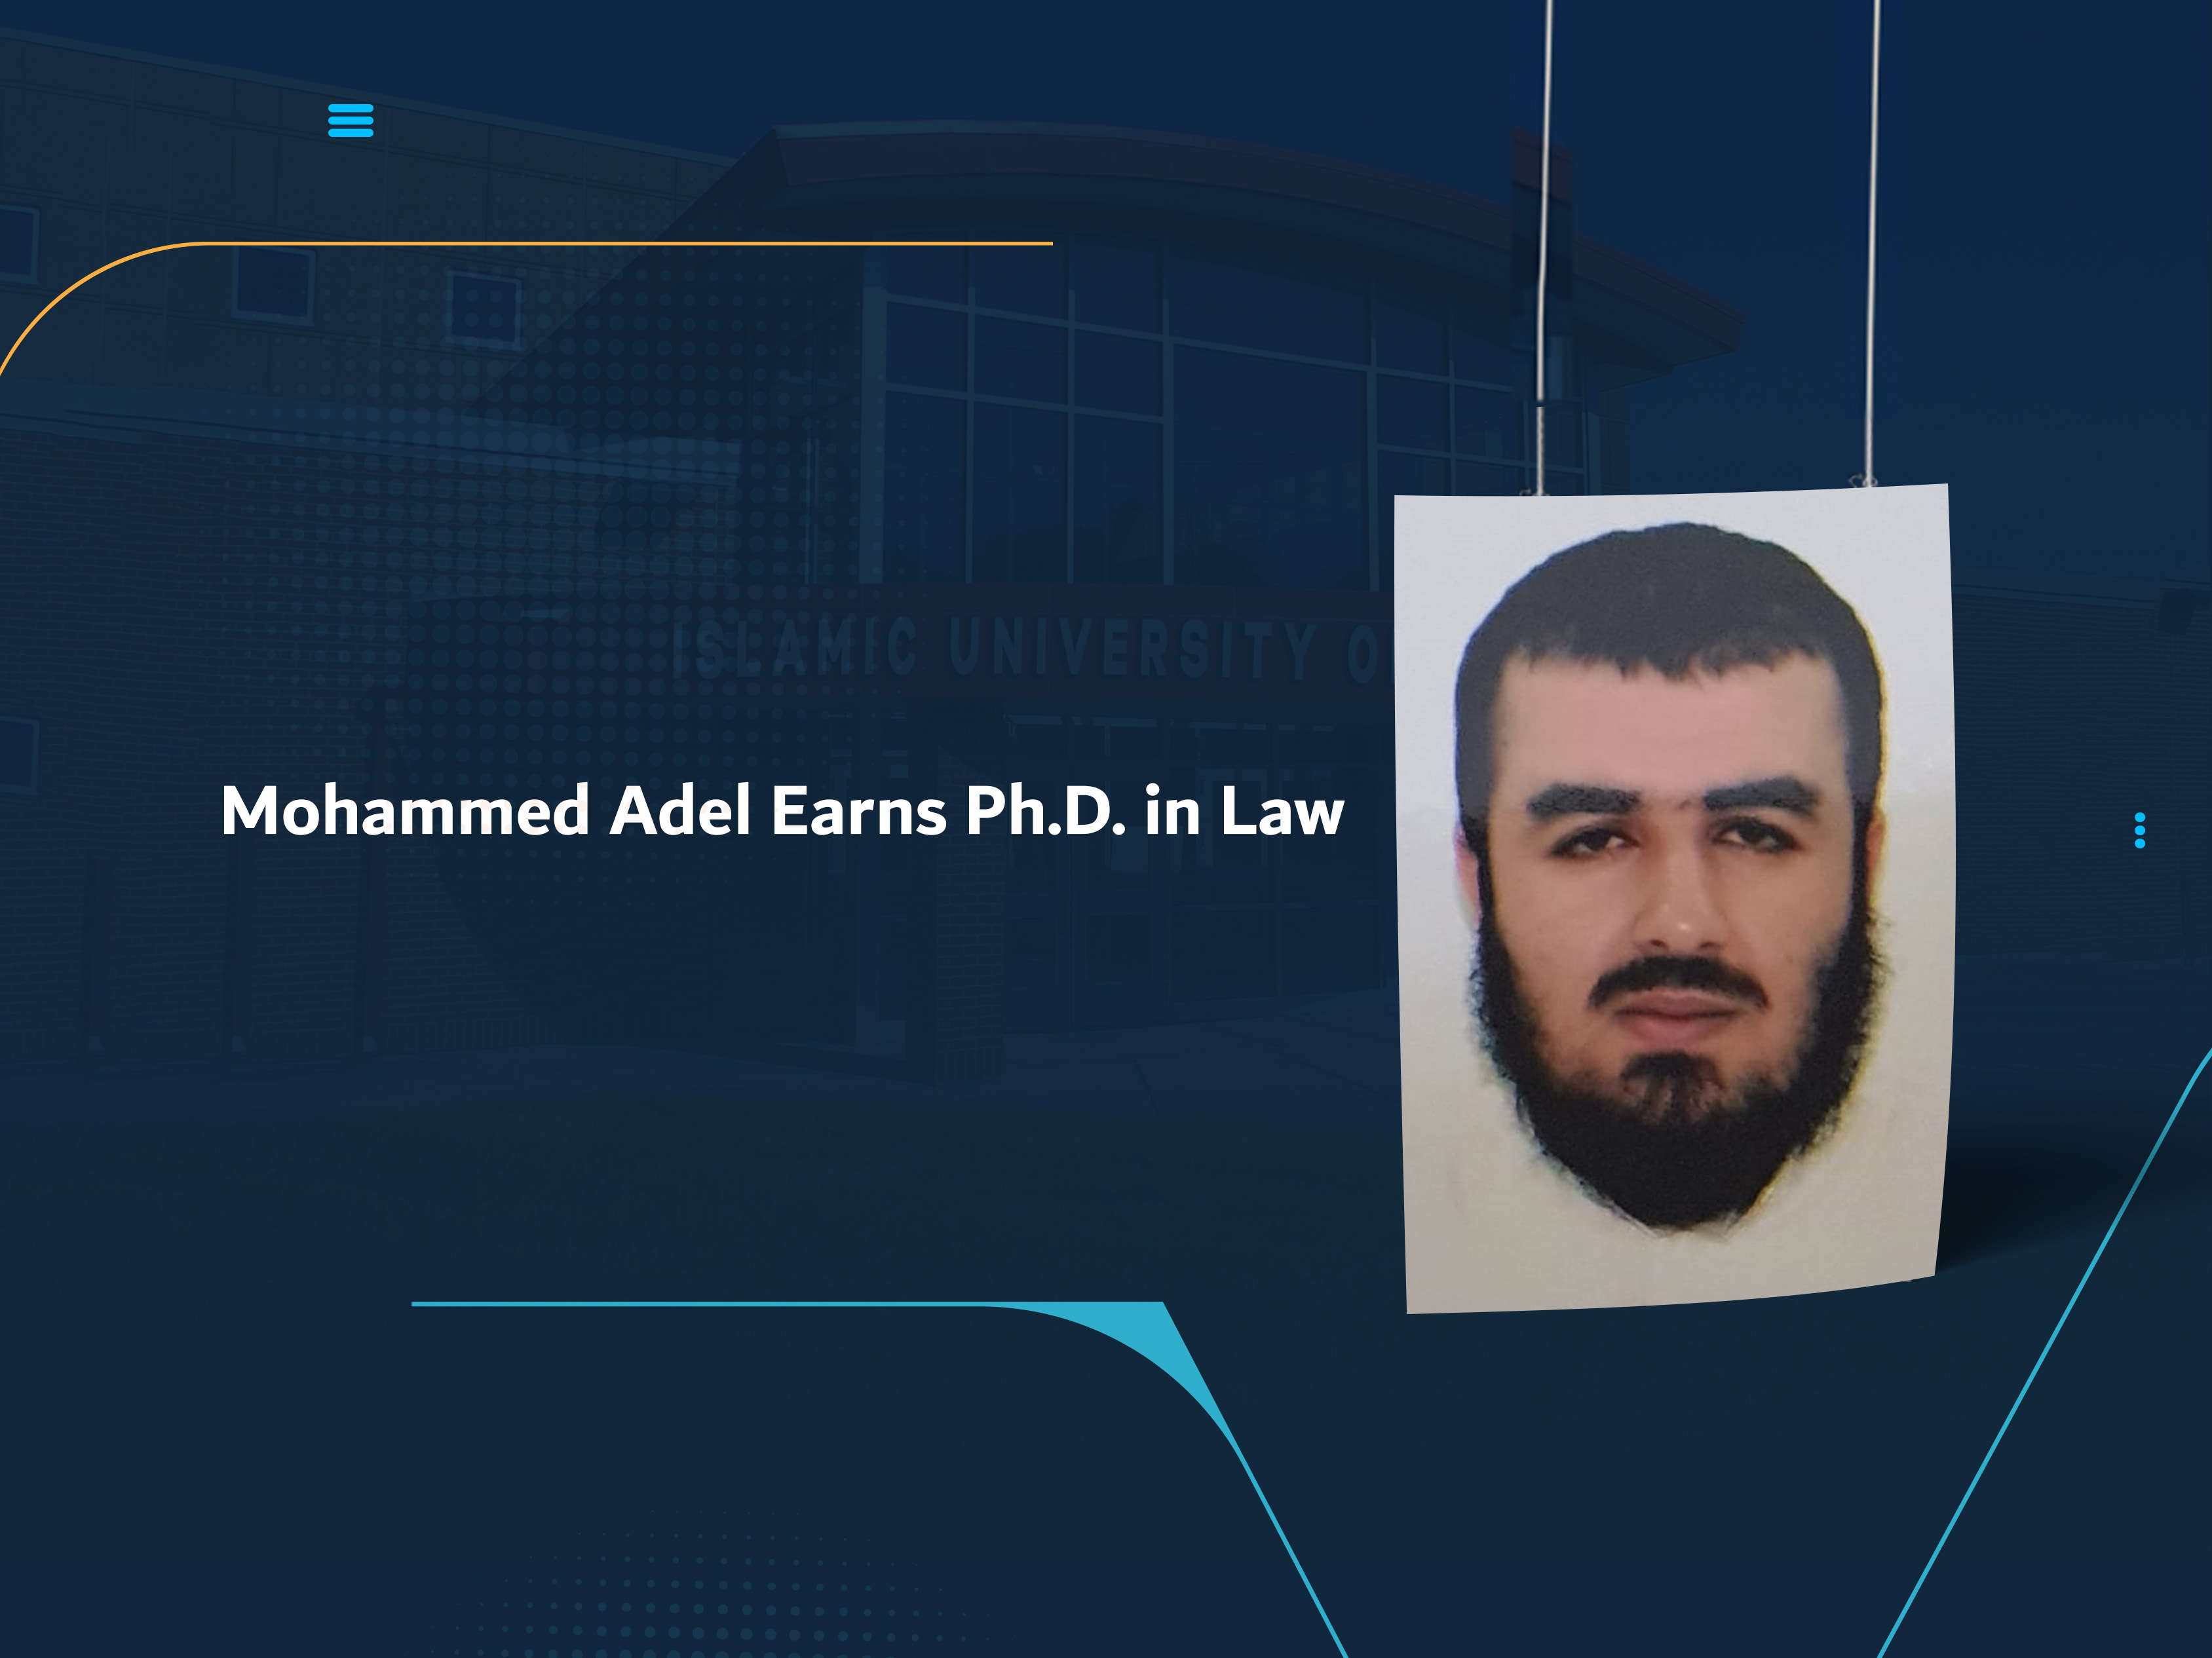 Mohammed Adel Earns Ph.D. in Law